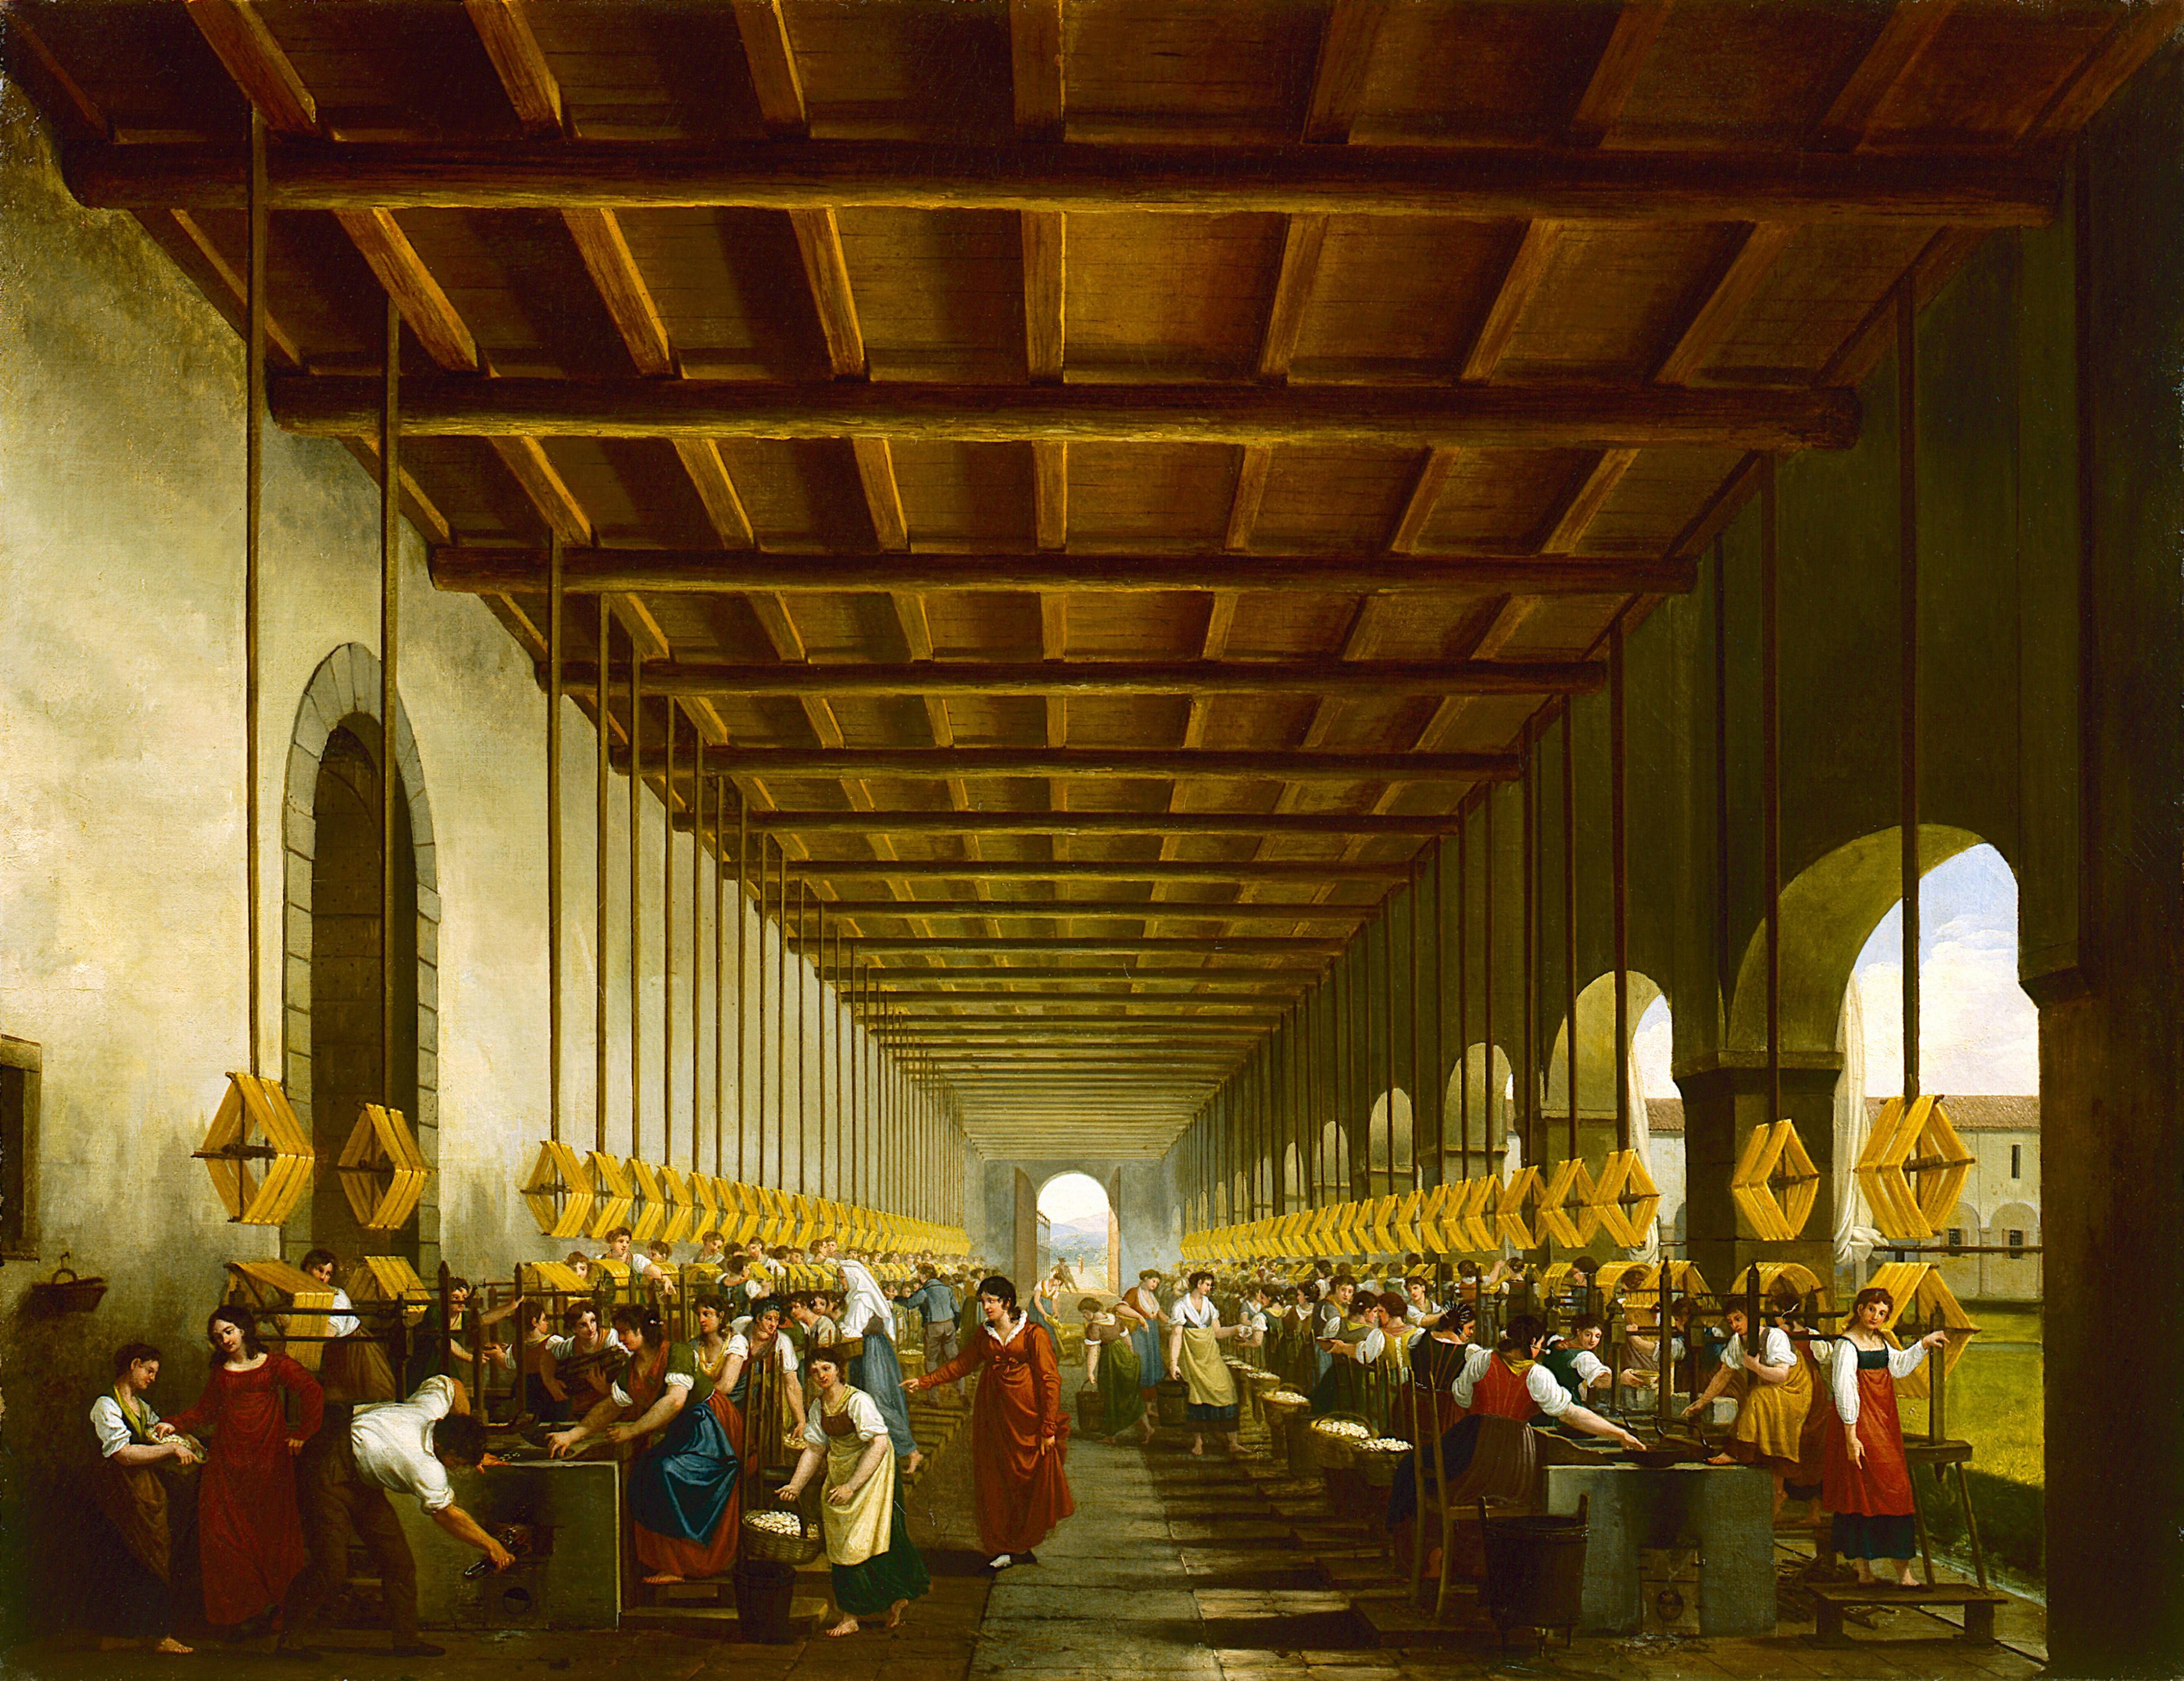 Ronzoni Pietros Gemälde »Filanda nel bergamasco« (Spinnerei bei Bergamo).